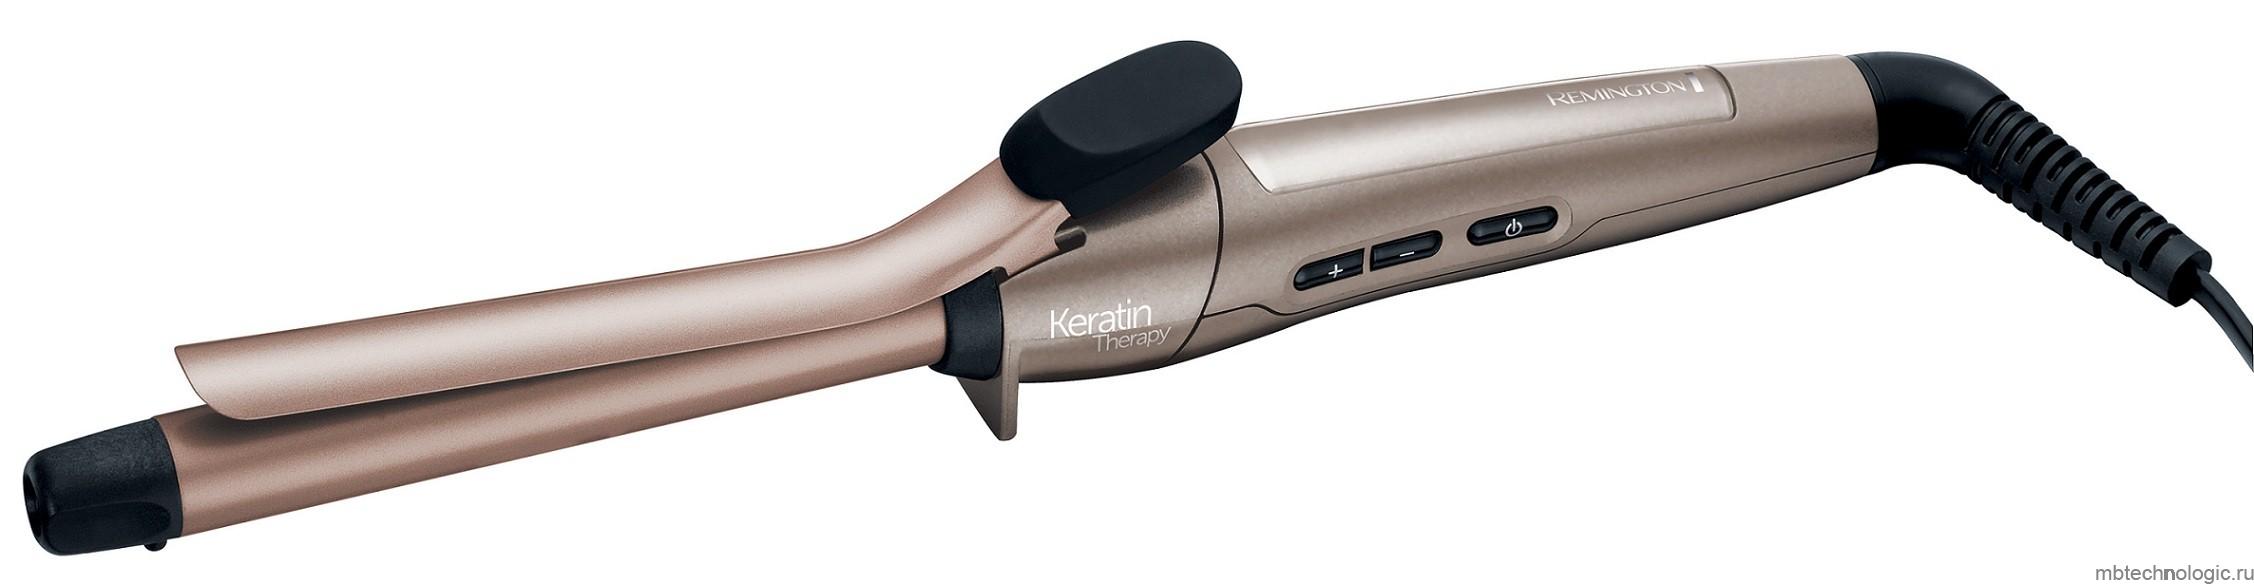 Remington CI 8319 Keratin Therapy Pro Curl